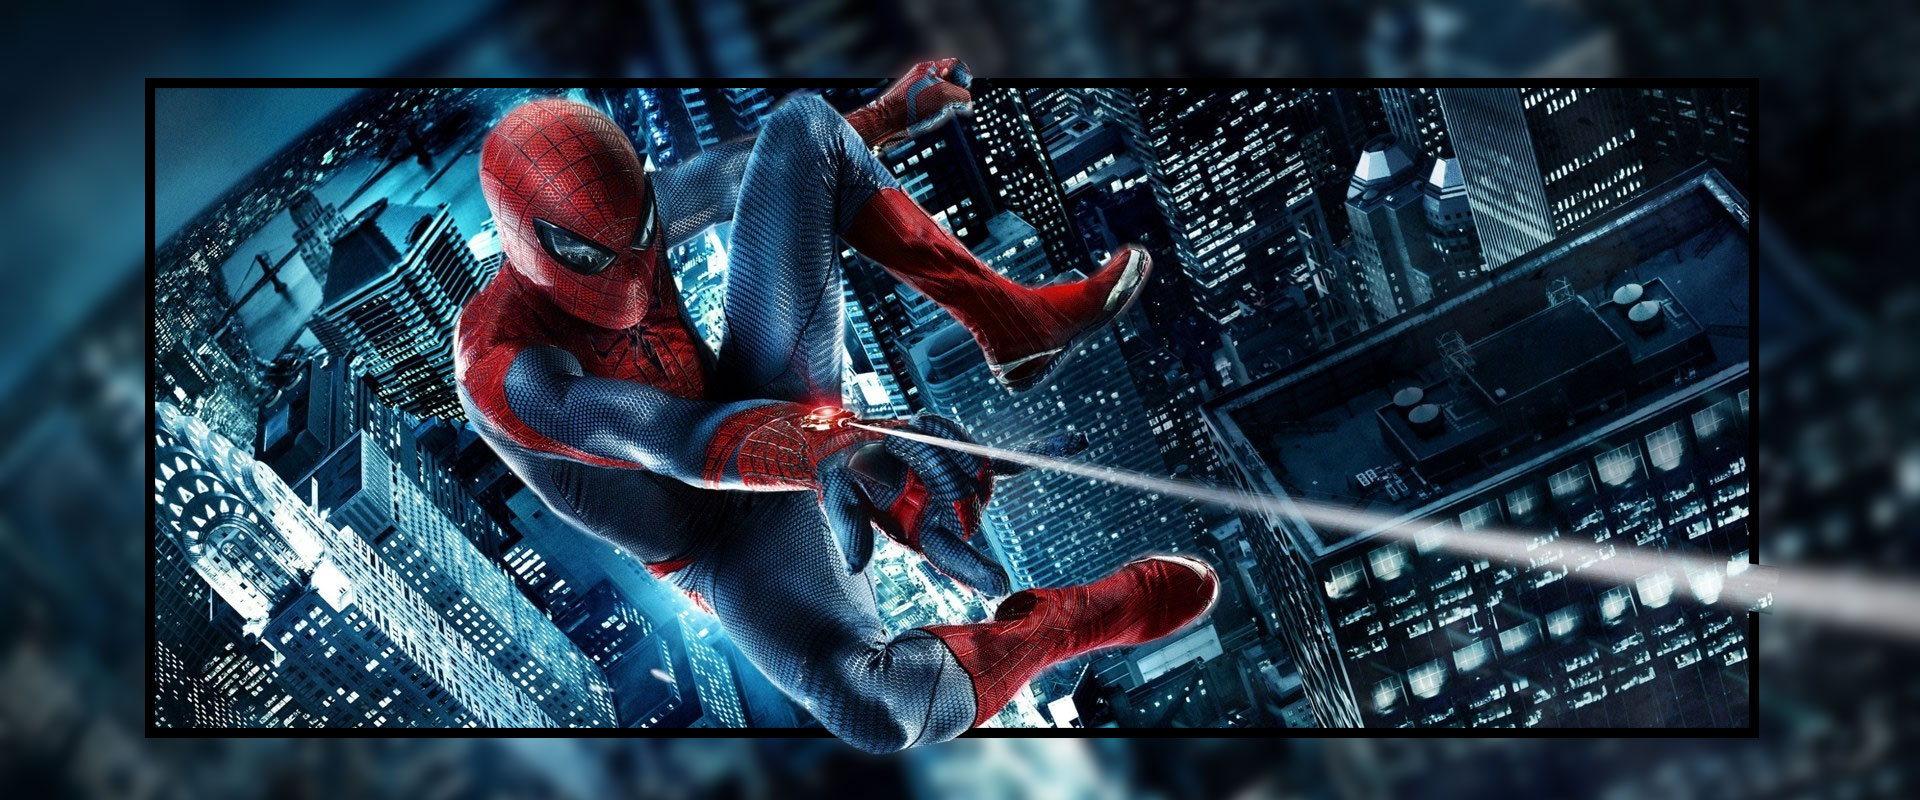 General 1920x800 cover art 9 (movie) The Amazing Spider-Man superhero